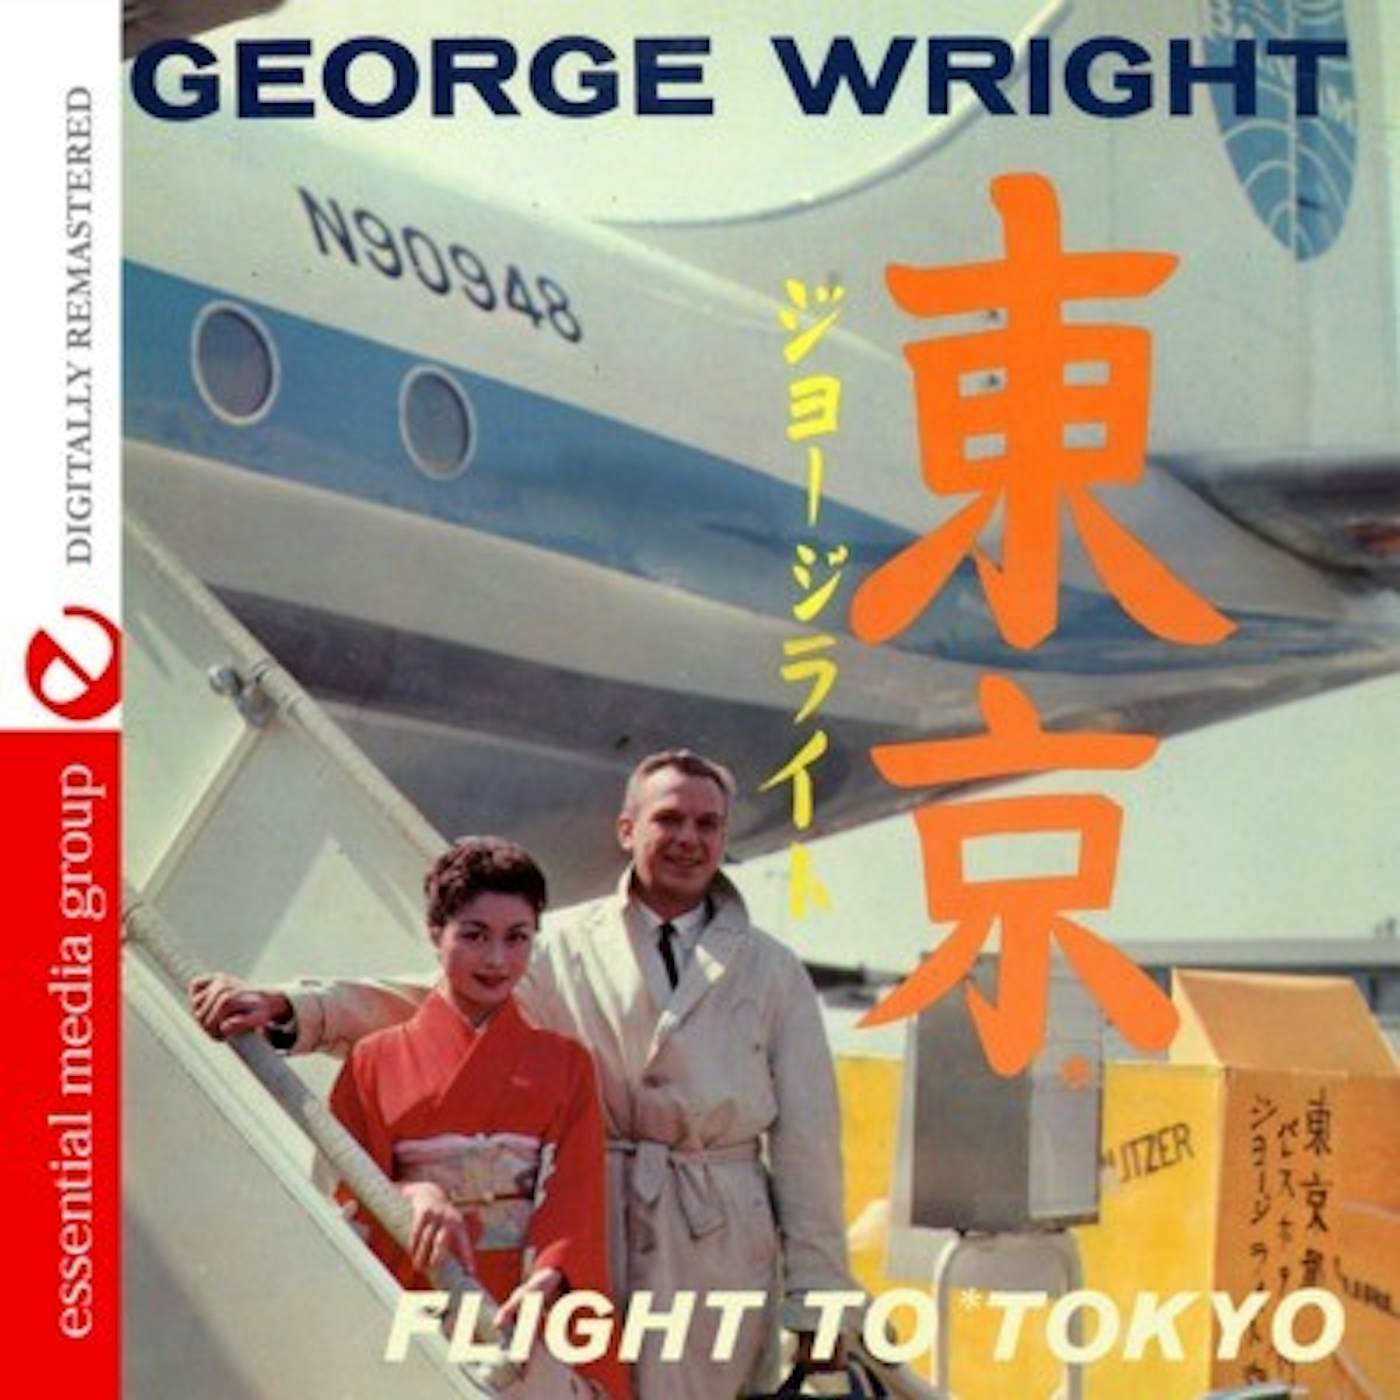 George Wright FLIGHT TO TOKYO CD